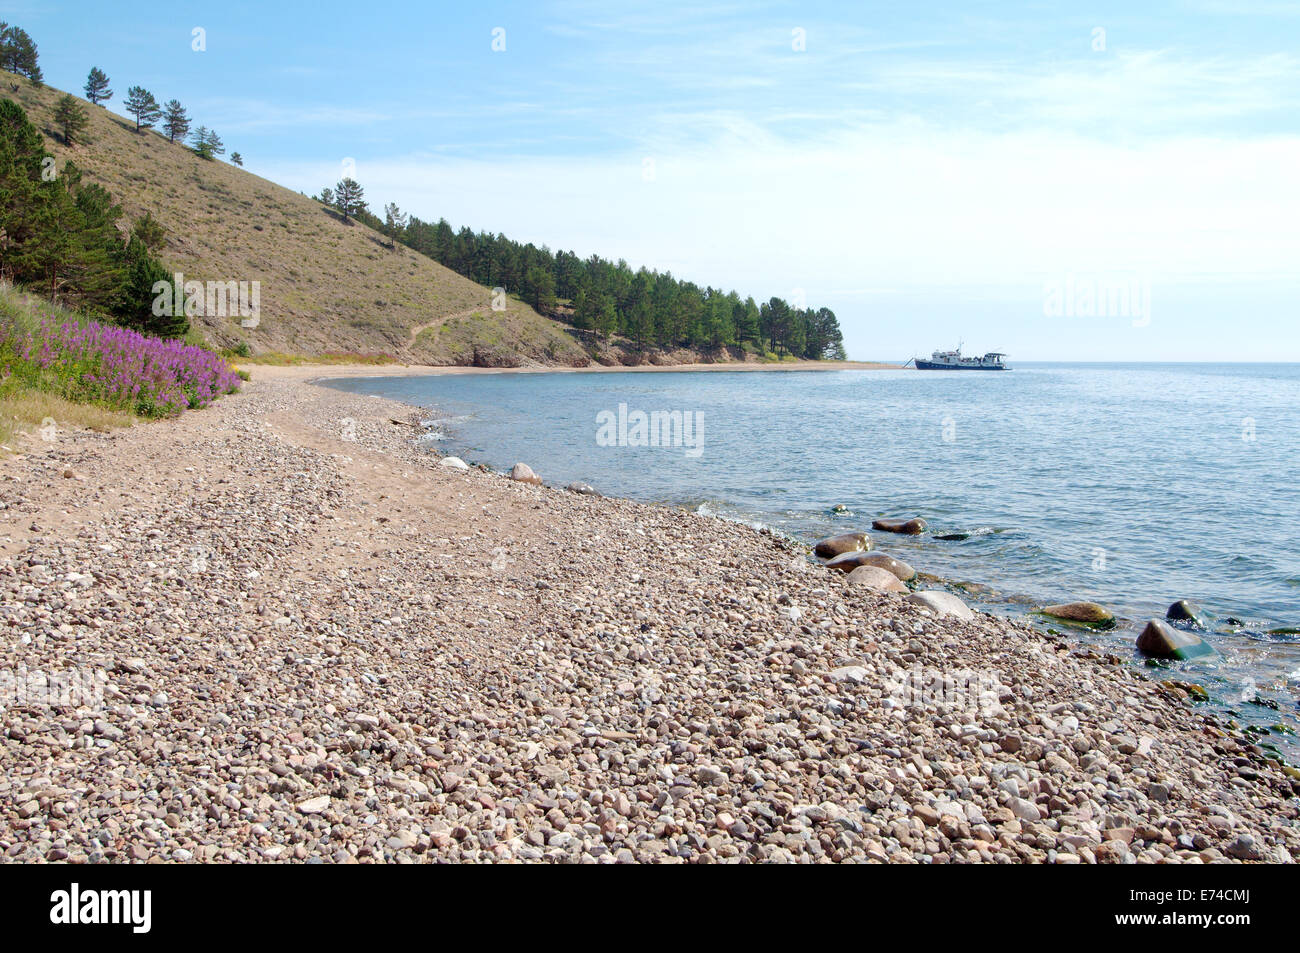 Reserve, Cape Sobolev, lake Baikal, Siberia, Russian Federation Stock Photo